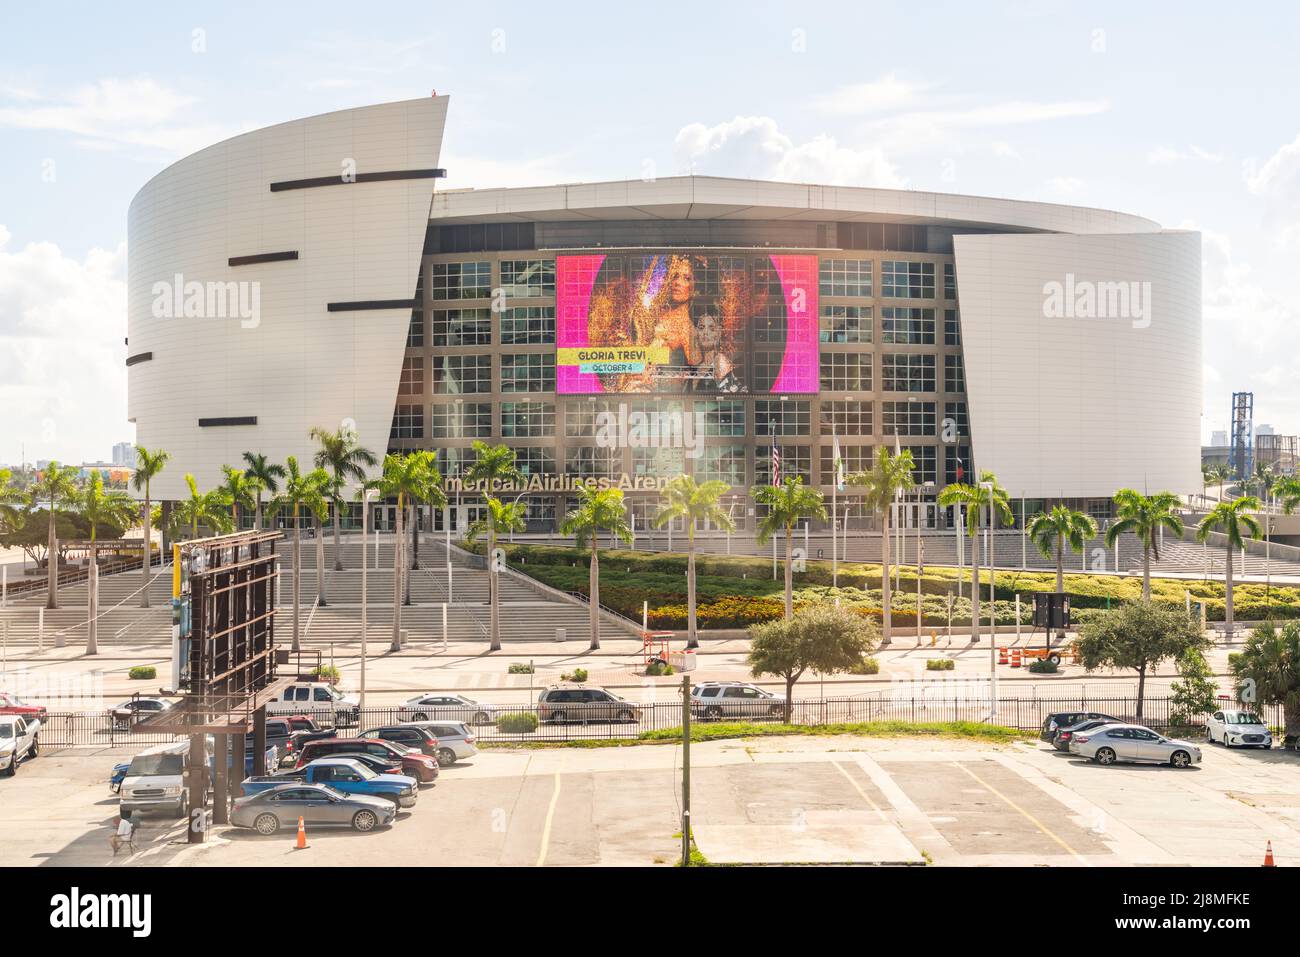 Miami, USA - September 11, 2019: American Airlines arena in Miami city center Stock Photo